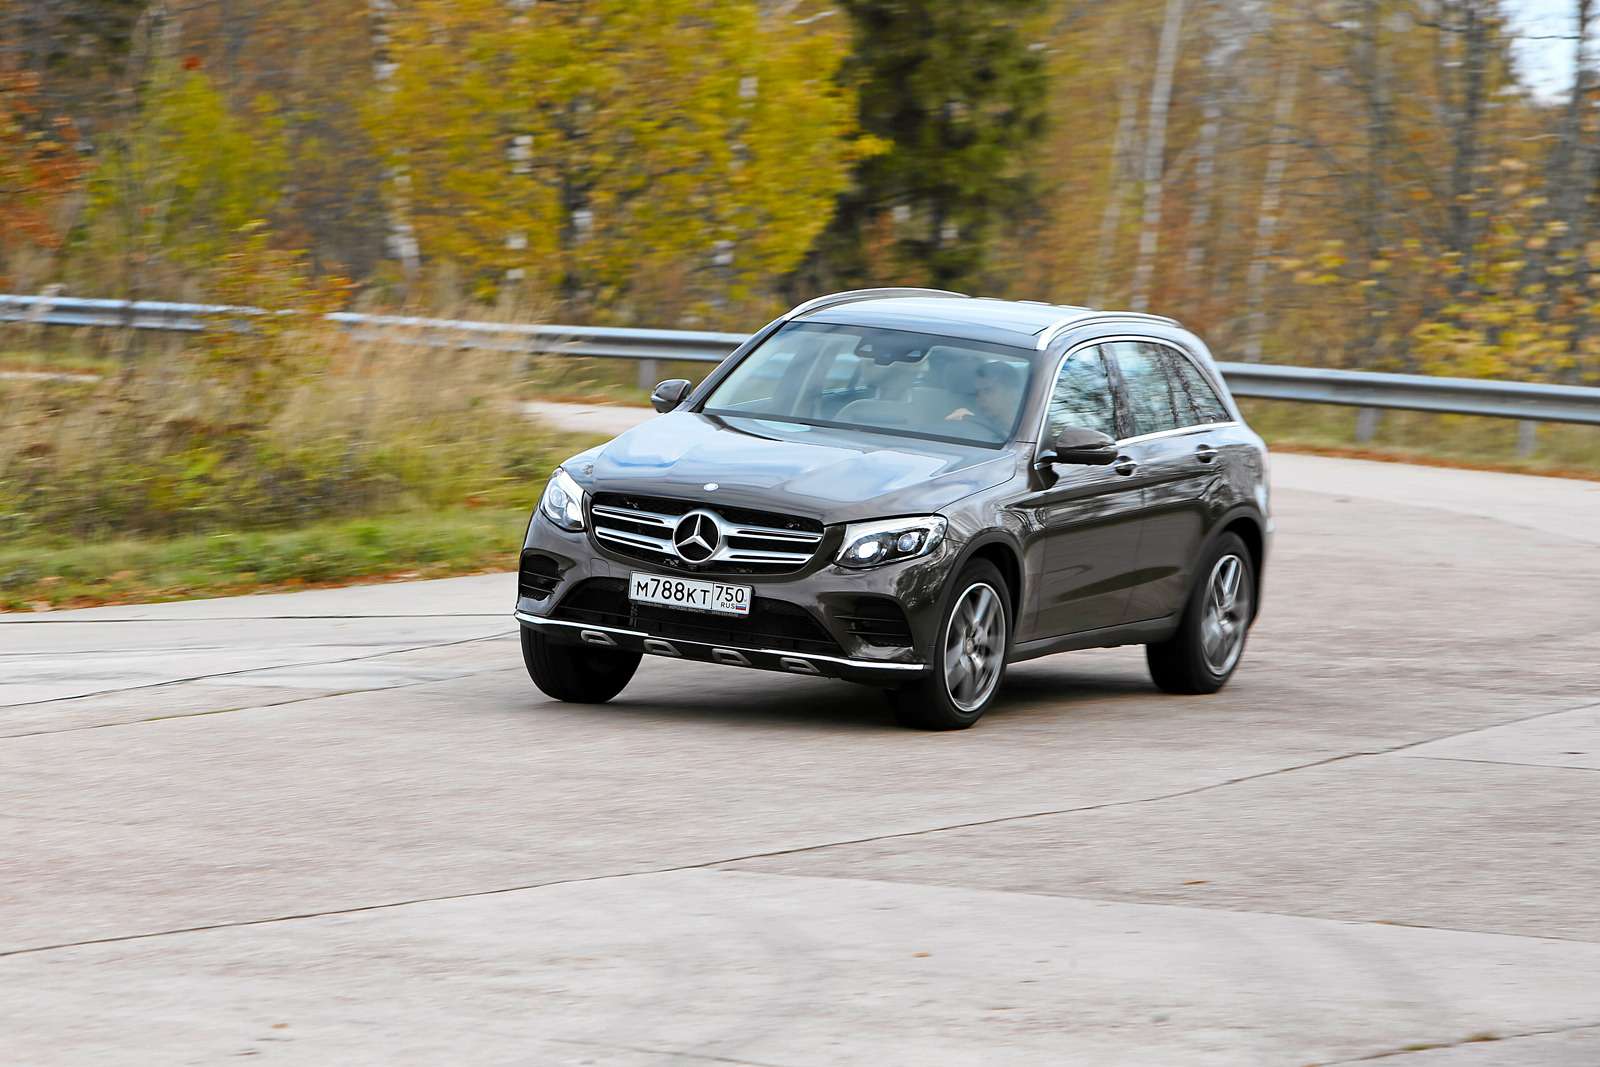  Mercedes-Benz стабилен в любых условиях – от бездорожья до скоростного автодрома. Но драйва BMW от него не ждите.